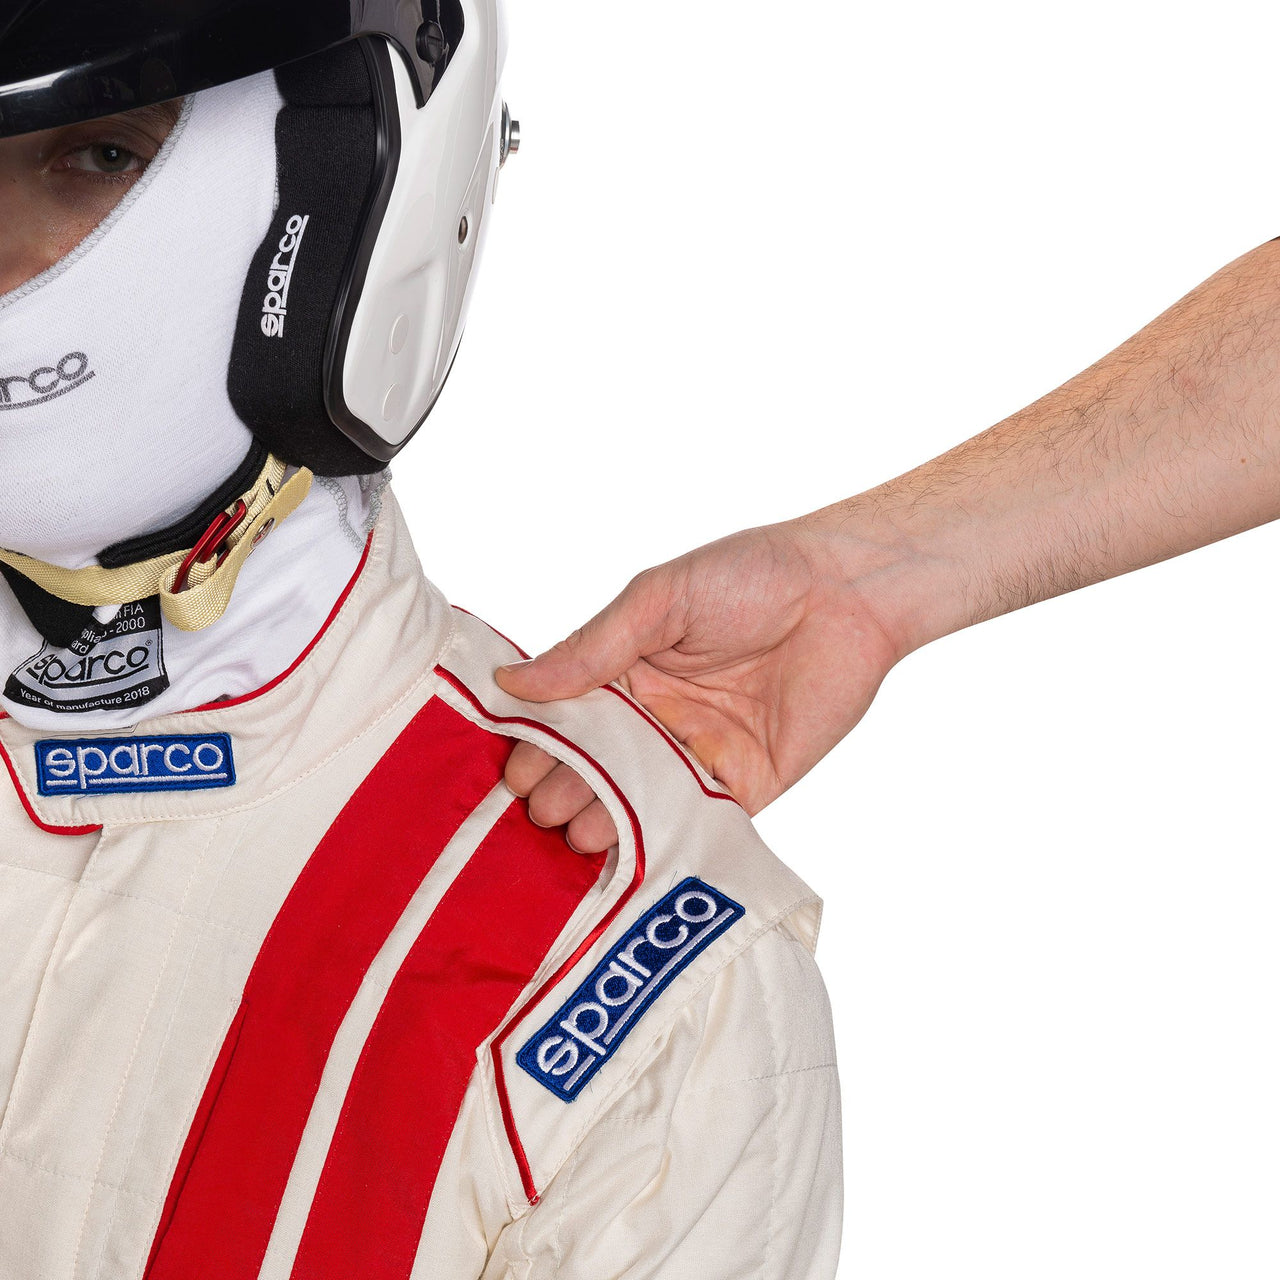 Sparco Vintage Classic Race Suit White / Red Shoulder Image